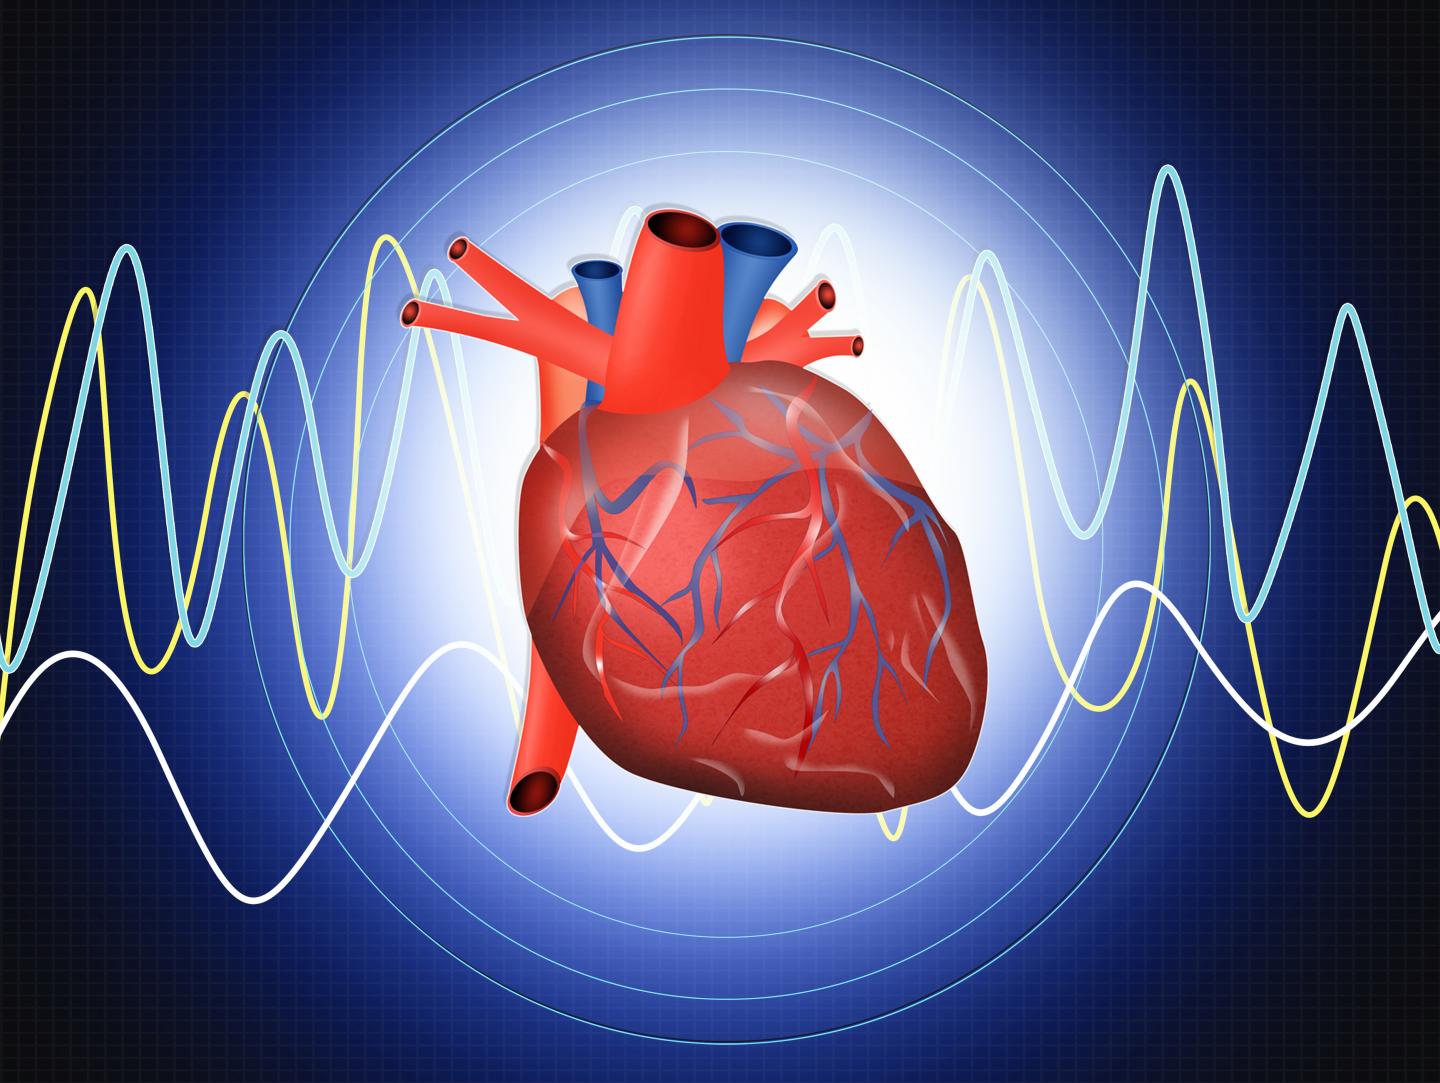 Novel biomarkers predict the development of incident heart failure.